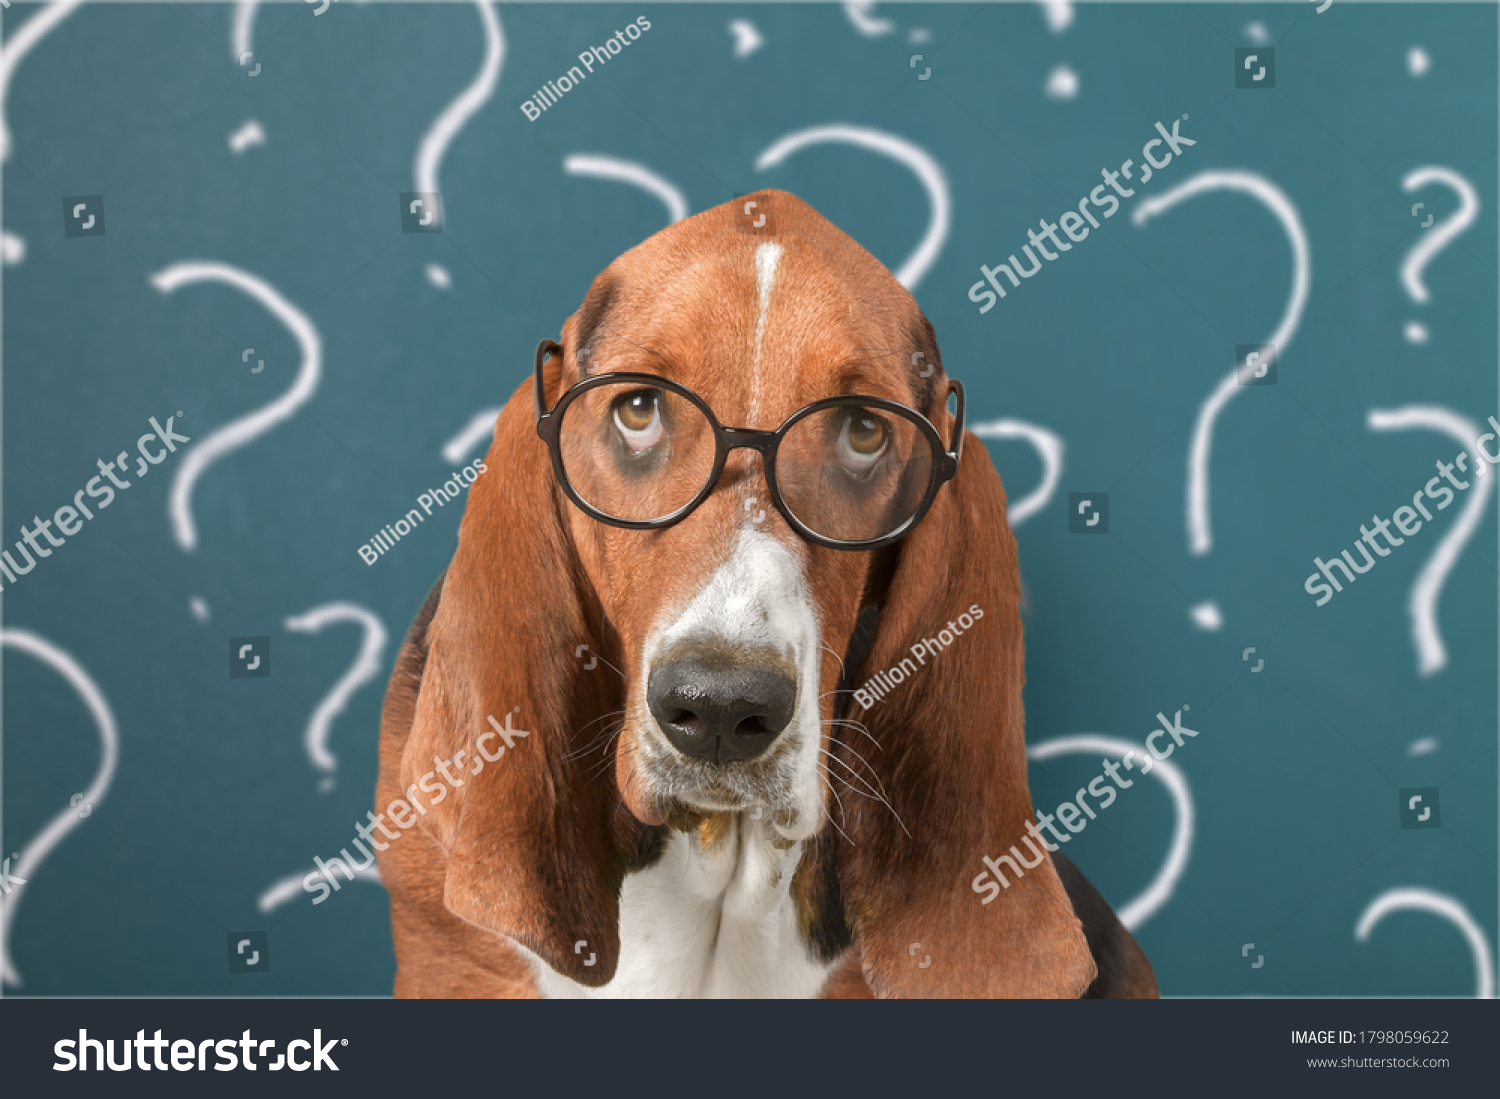 Dog Question Mark Meme